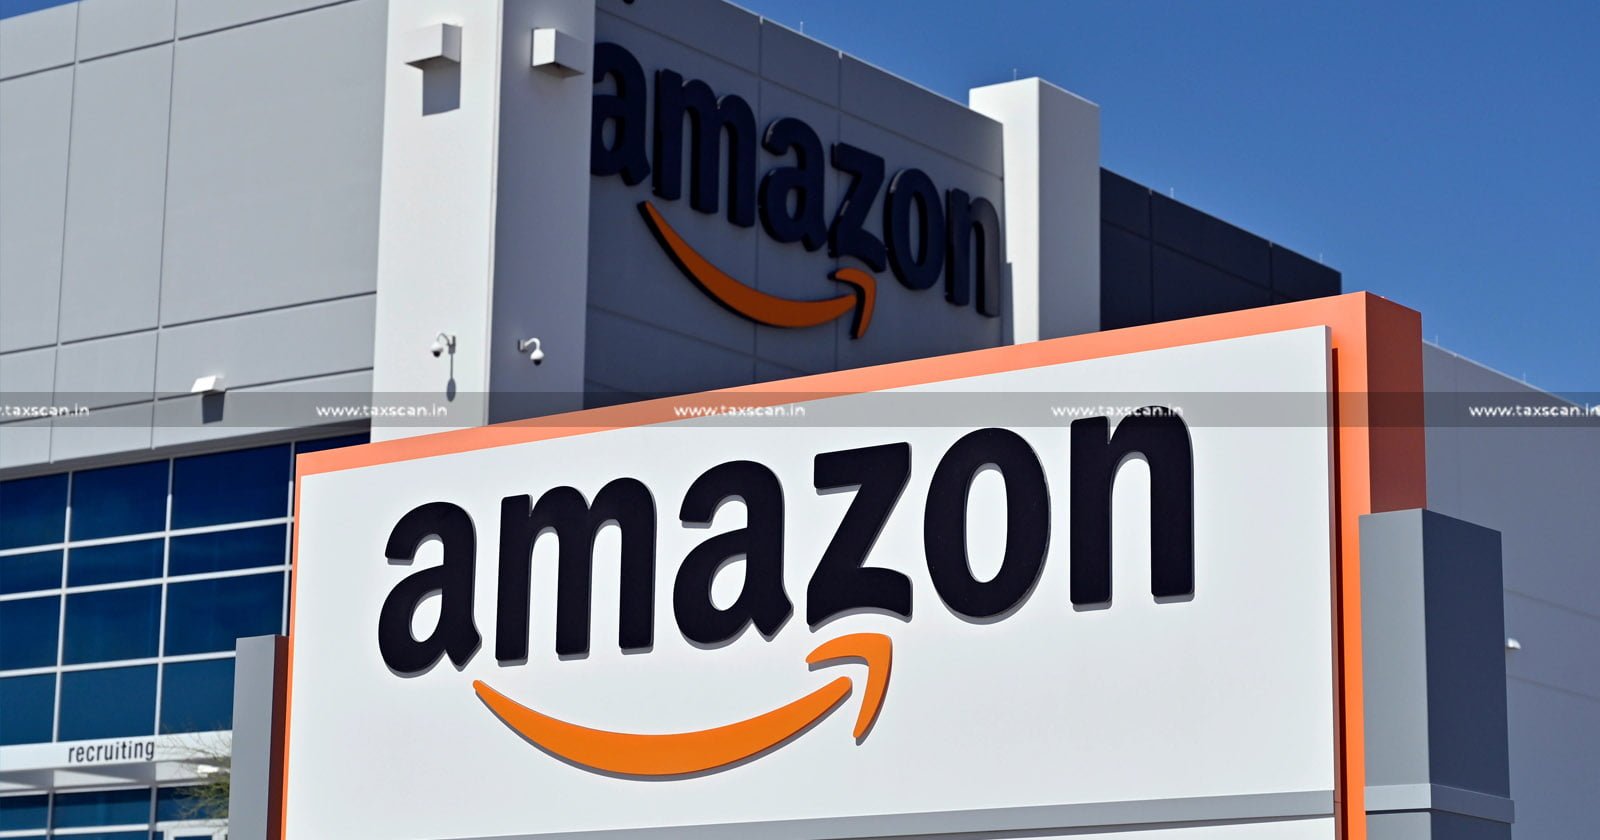 Amazon India - Amazon - Amazon Delivery Costs and Warranty Expenses - AMP Expenditure - ITAT Bangalore - Taxscan